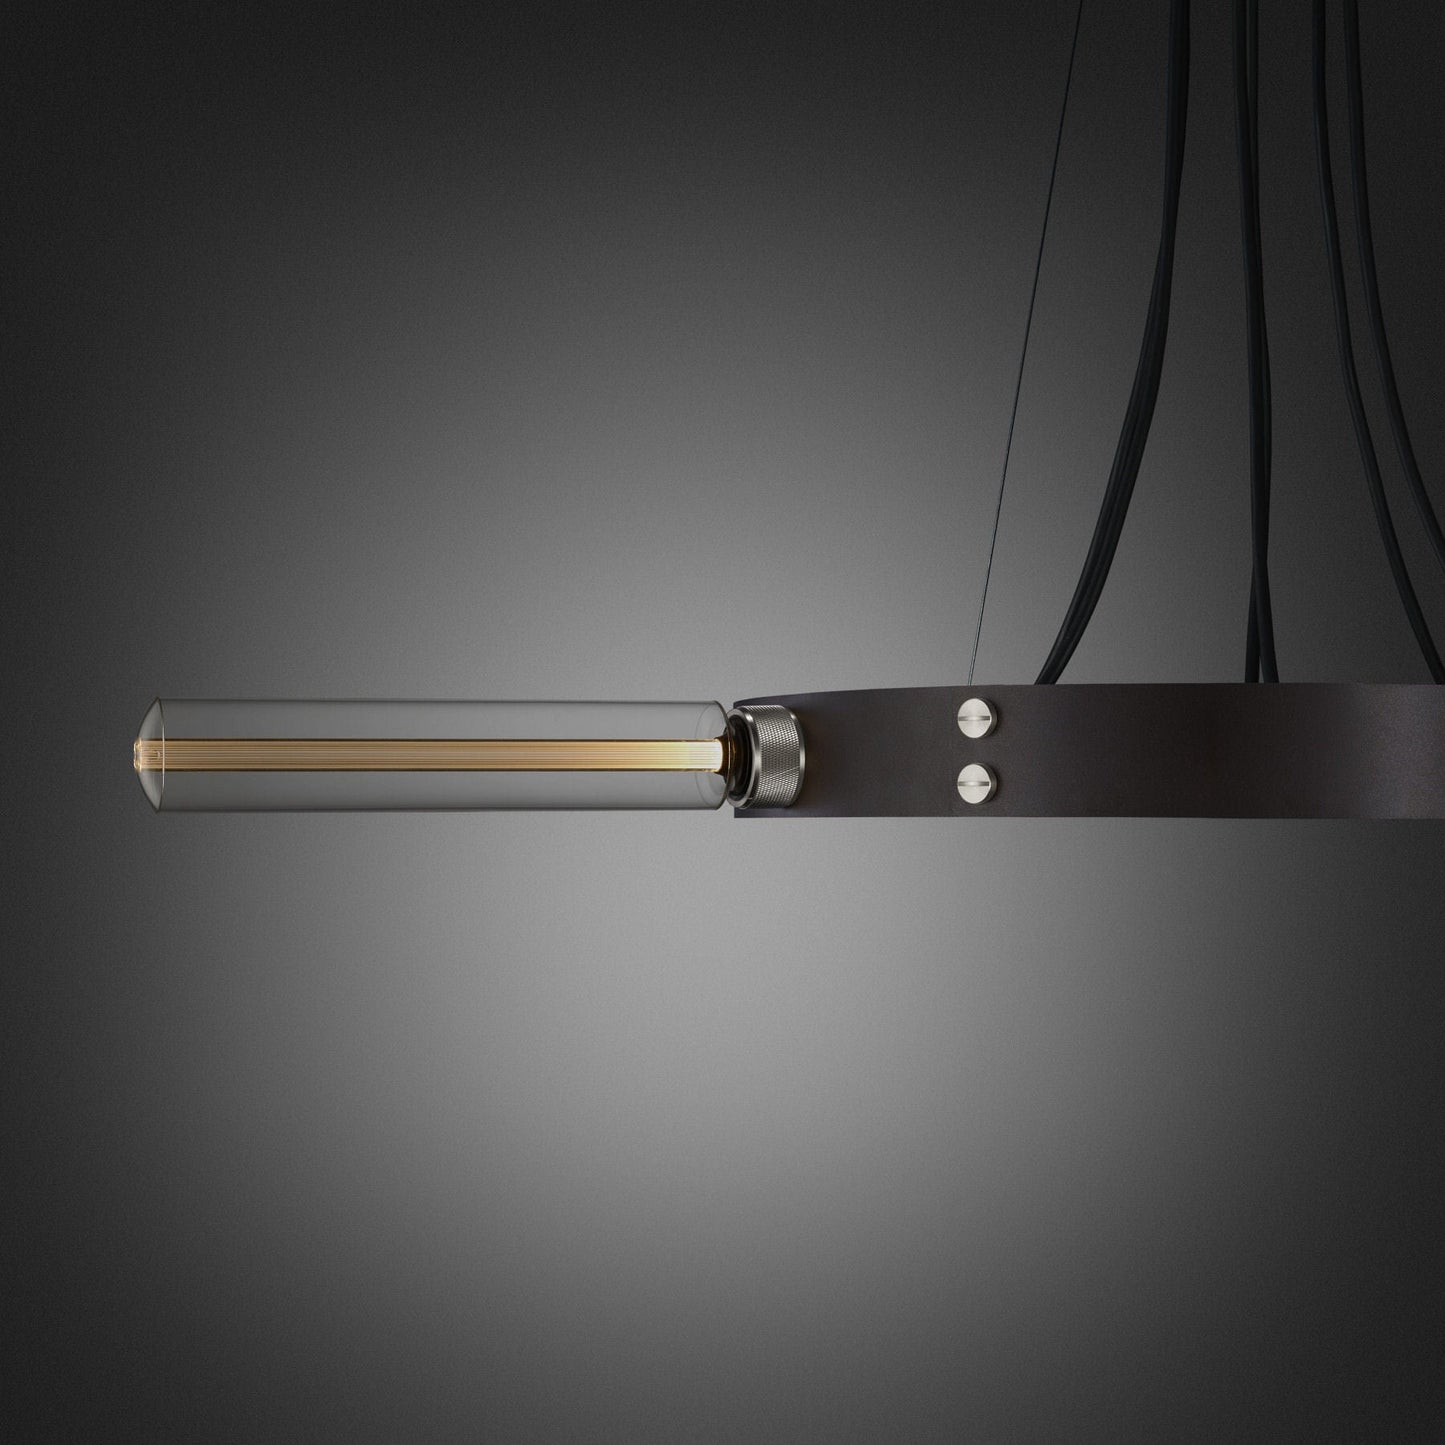 HERO GRAPHITE Industrial Chandelier / Light - |VESIMI Design| Luxury and Rustic bathrooms online